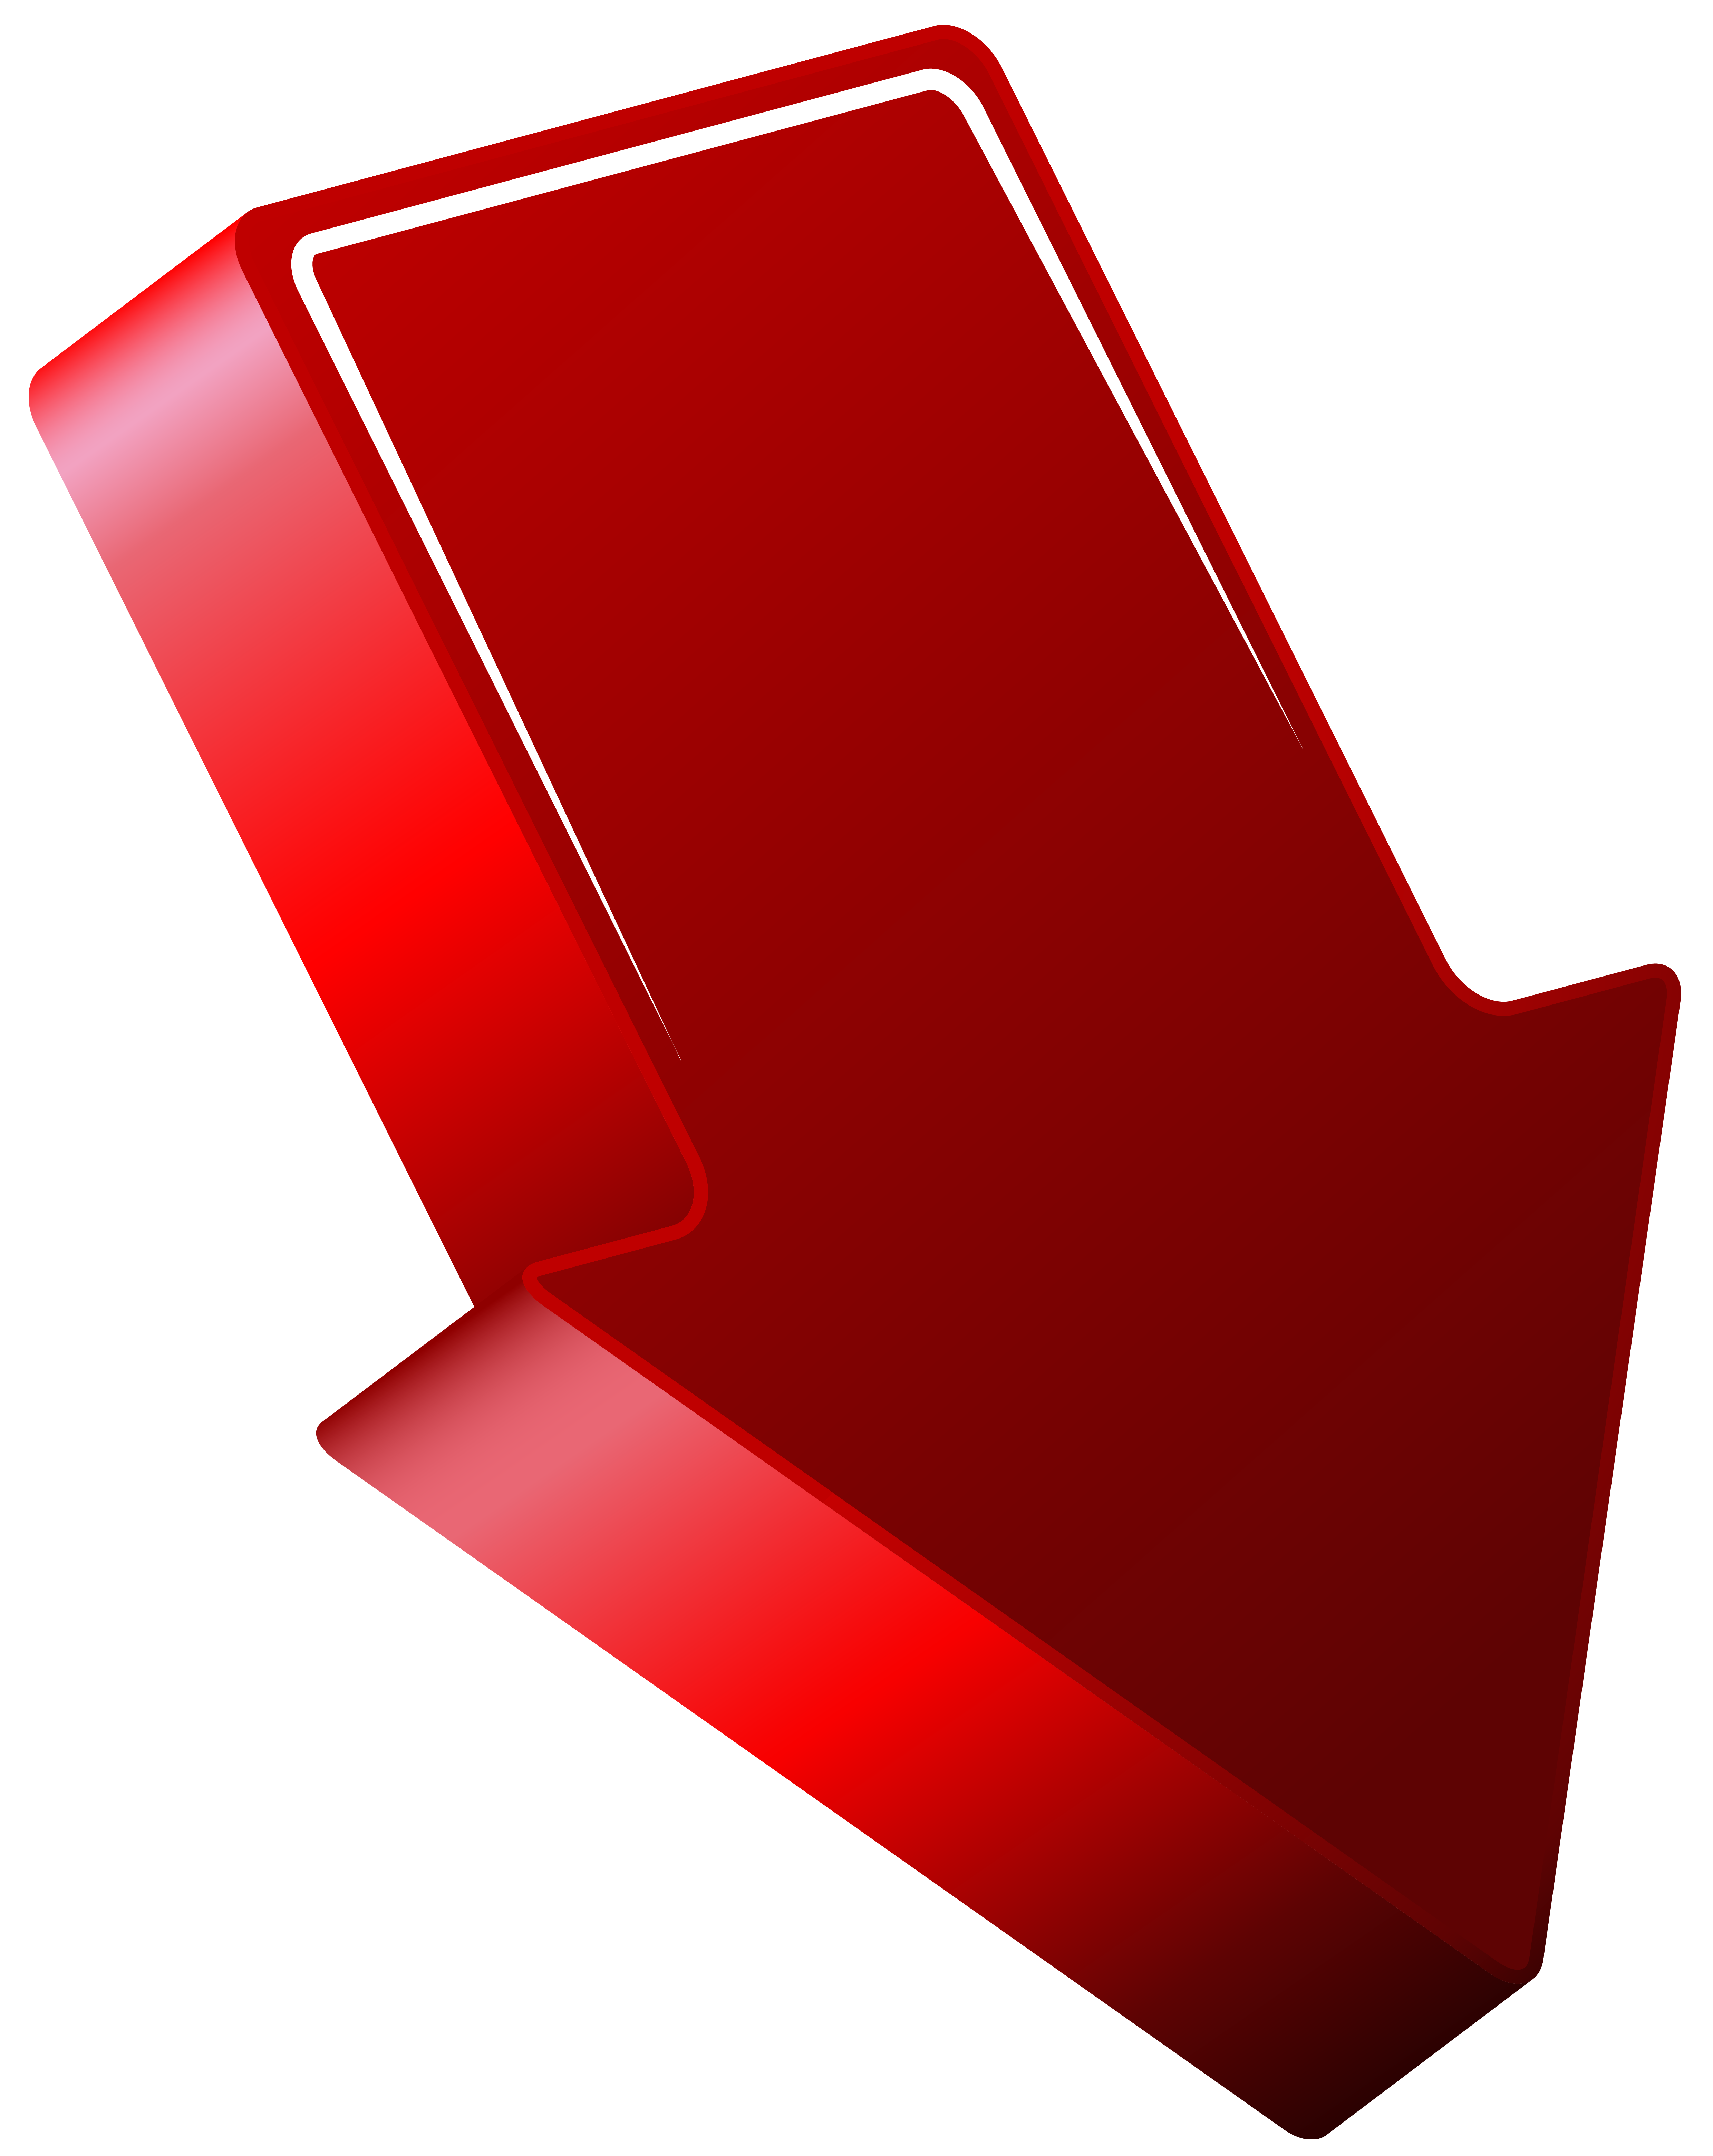 Red Arrow Transparent PNG Clip Art Image